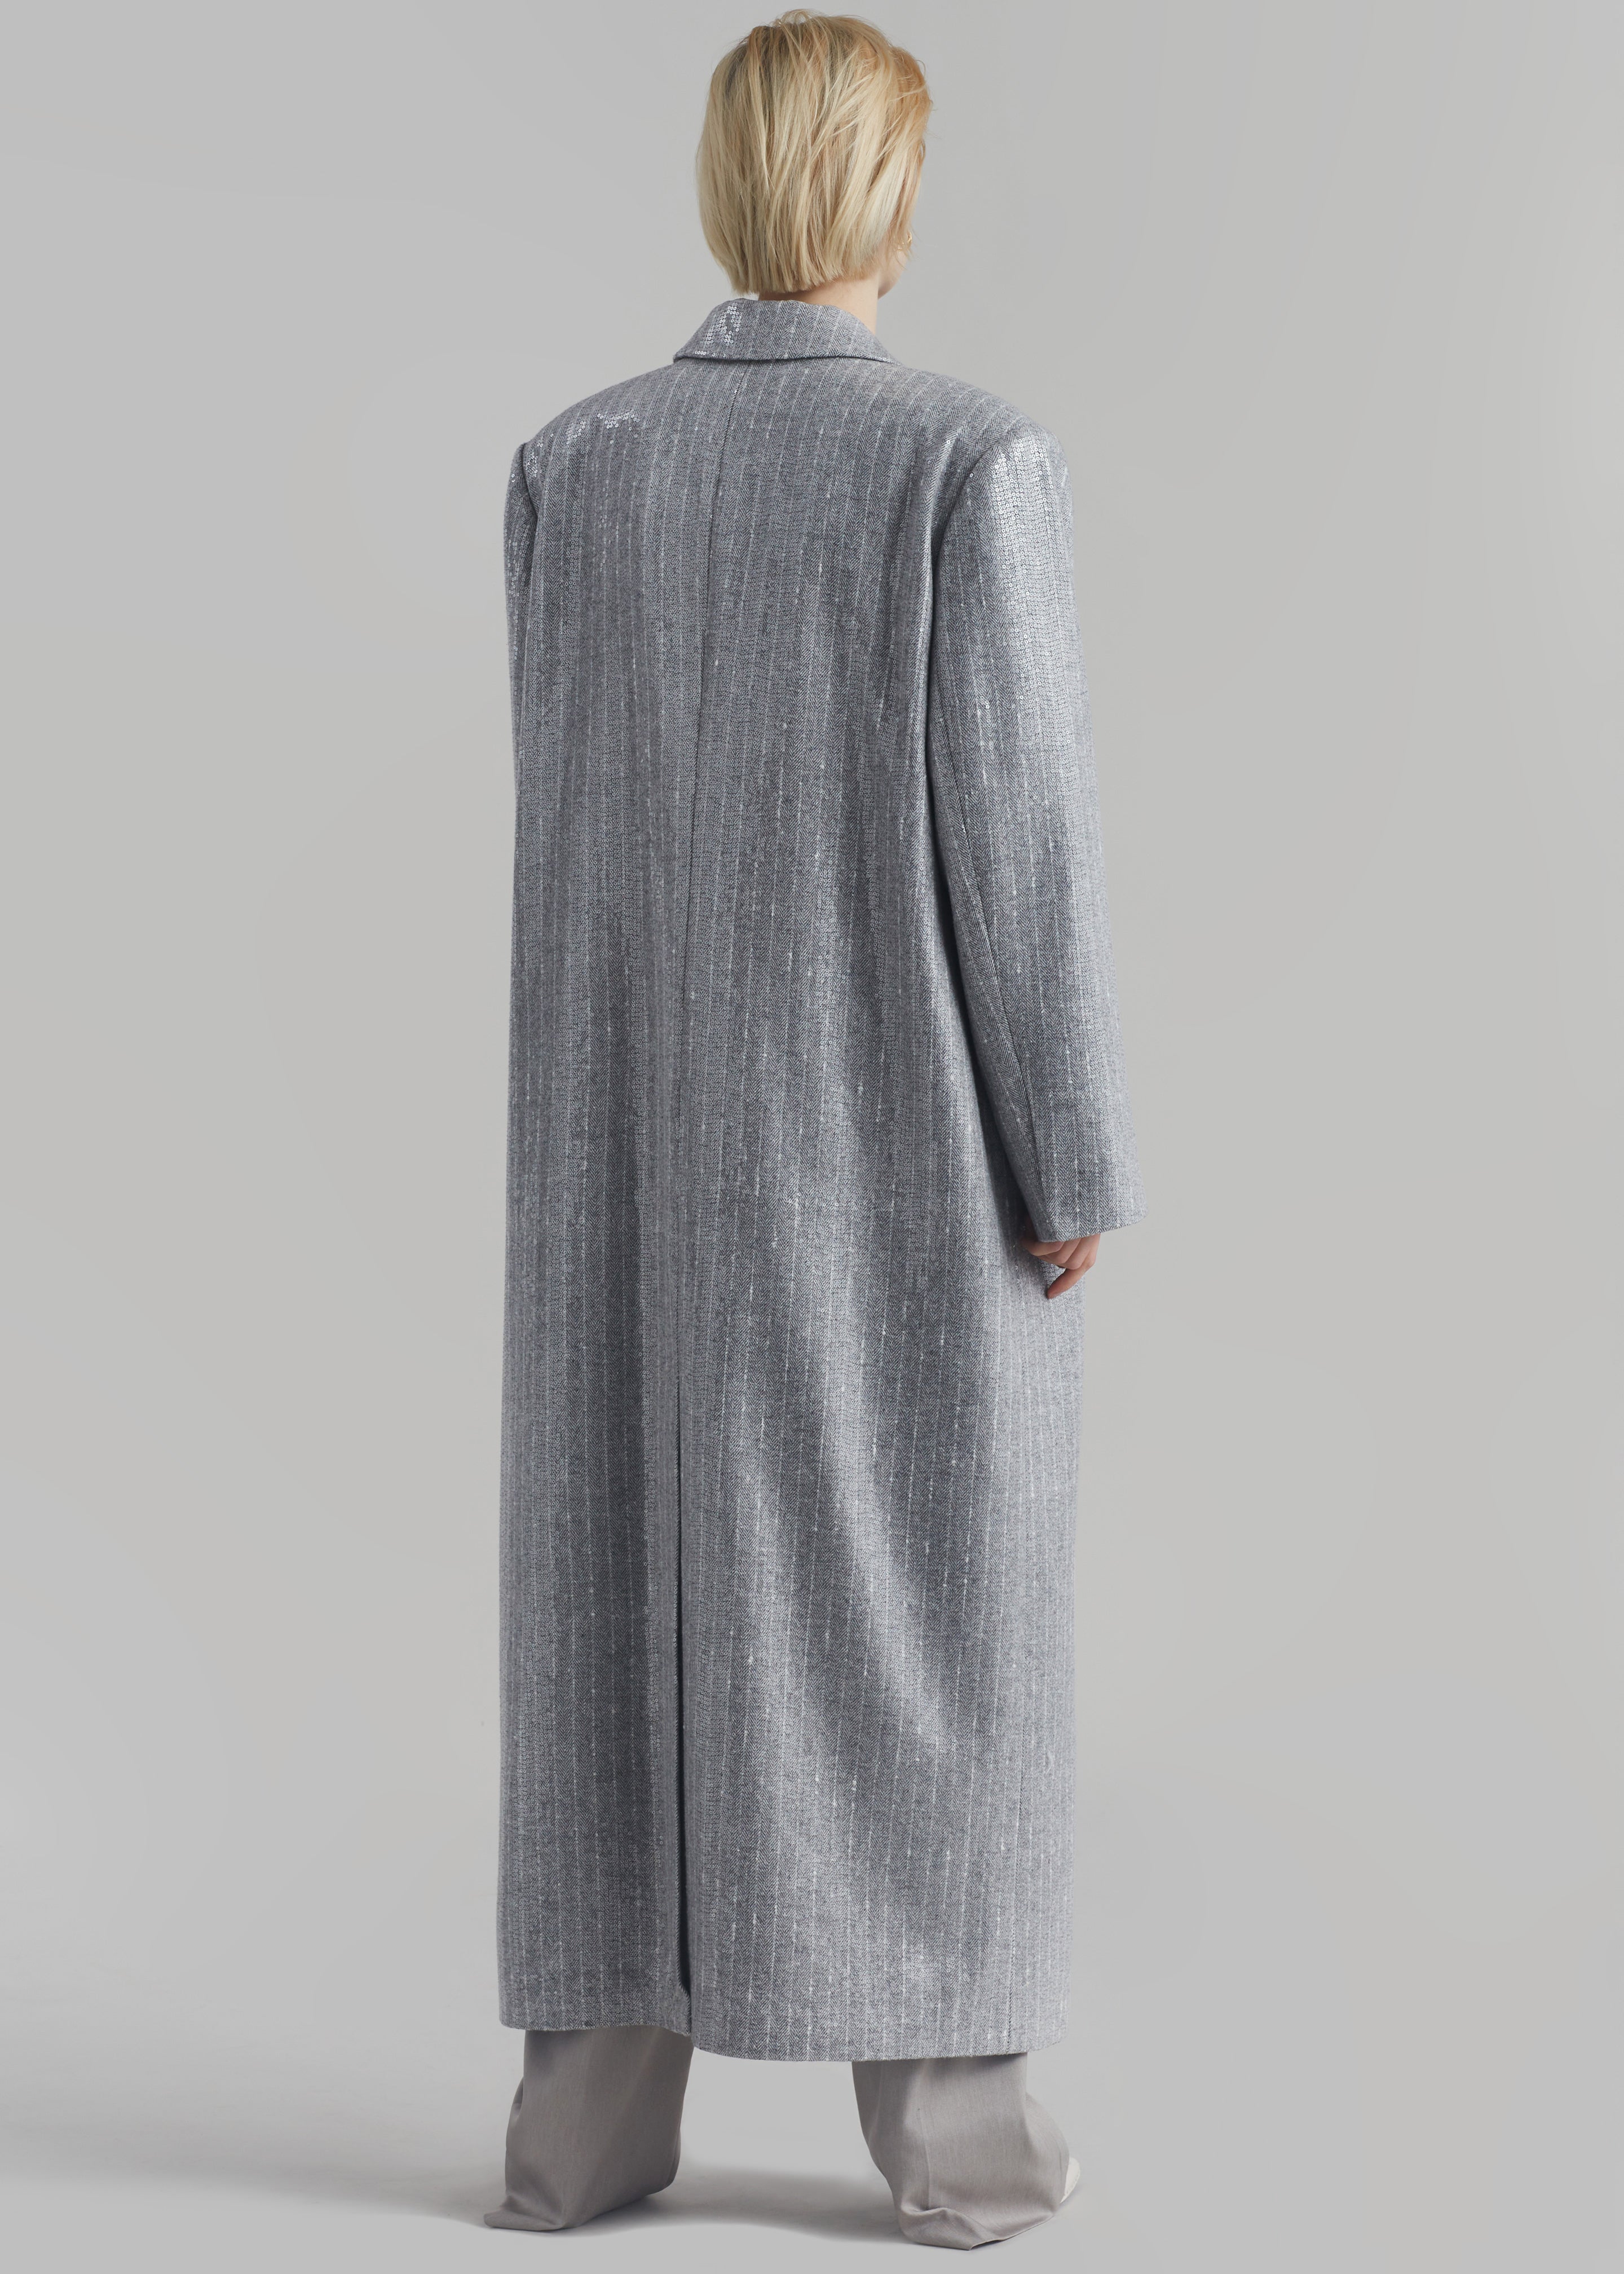 Jennifer Sequins Coat - Grey/White Stripe - 8